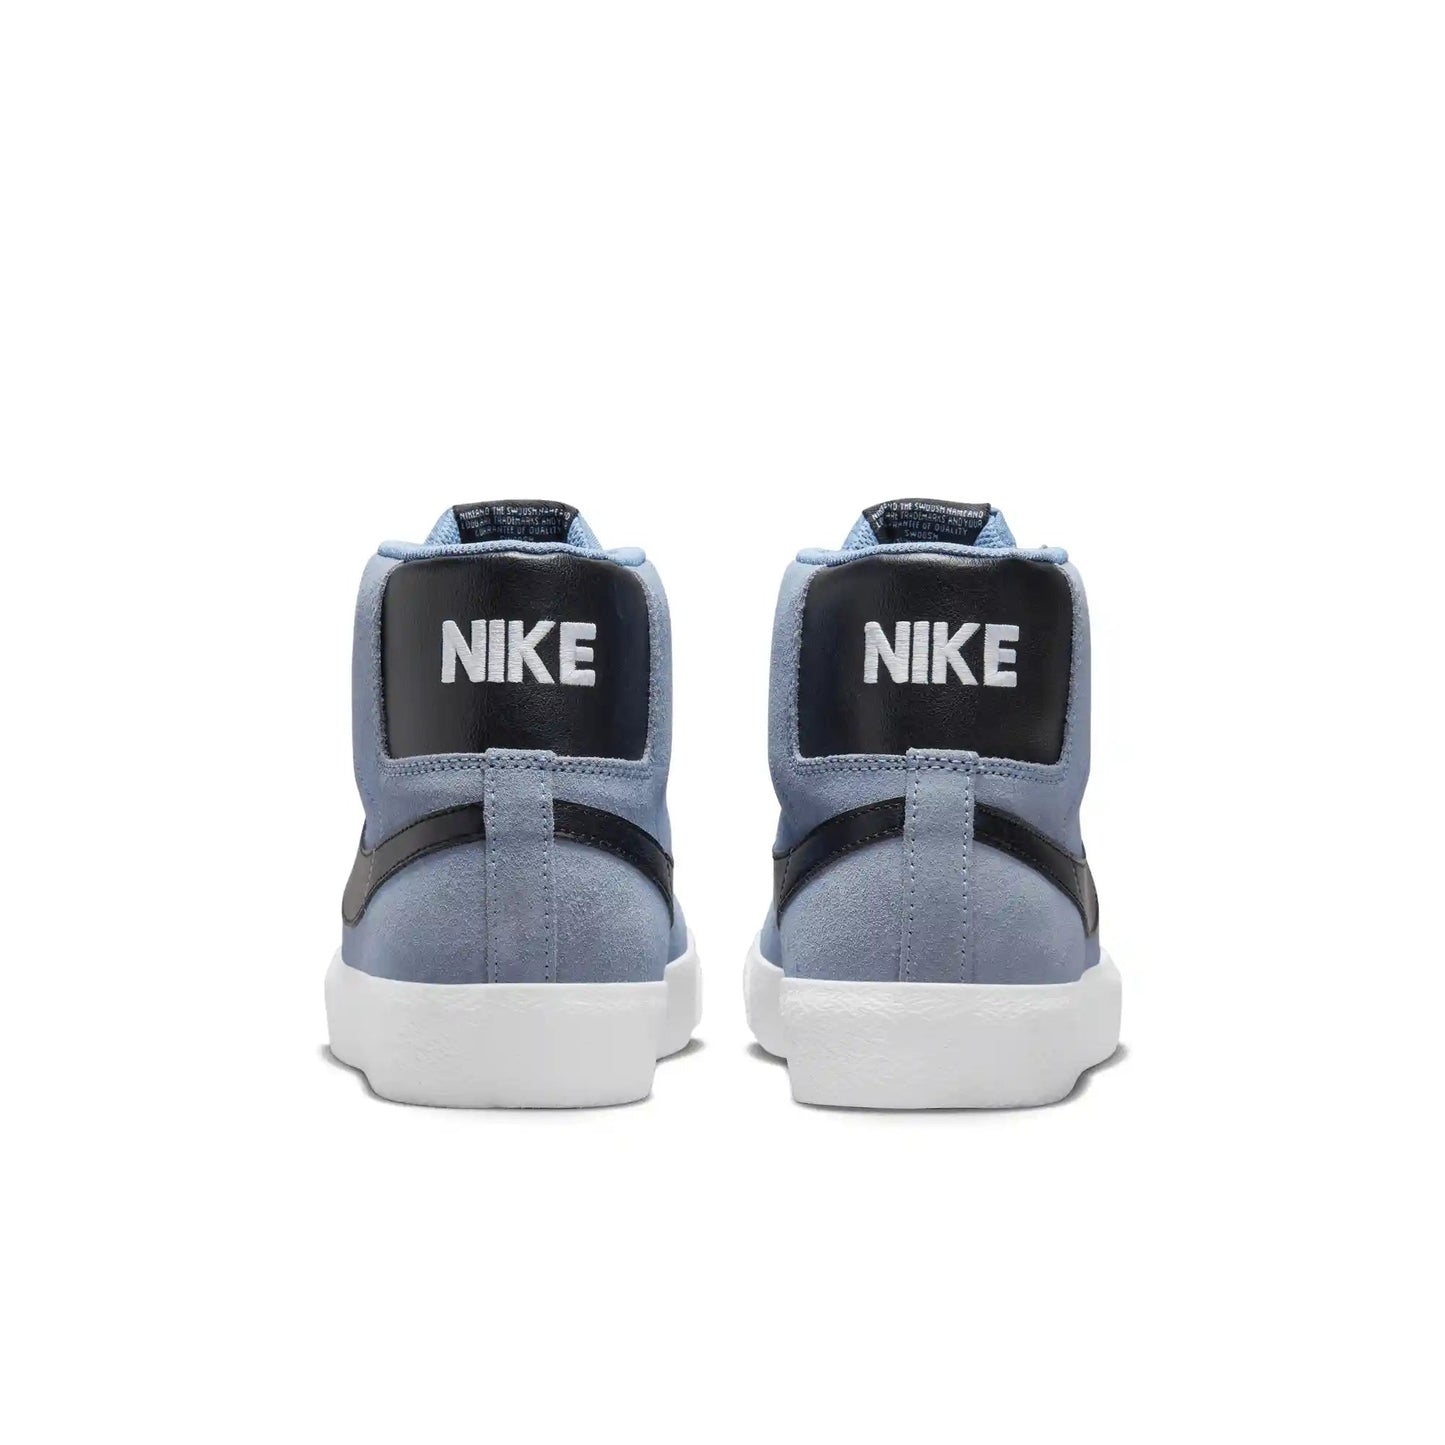 Nike SB Zoom Blazer Mid, ashen slate/black-white-ashen slate - Tiki Room Skateboards - 4